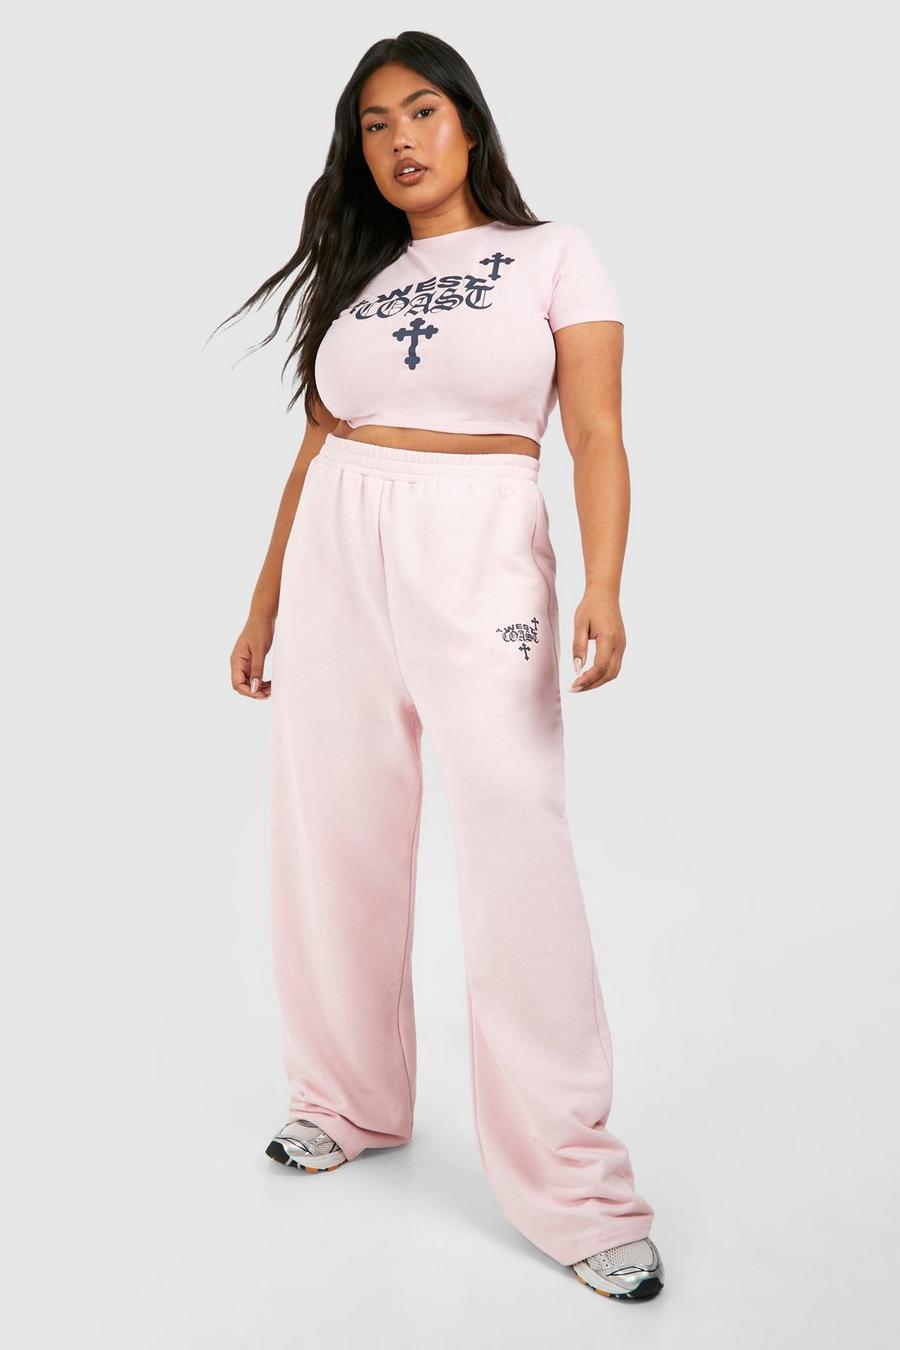 Baby pink teen vogue urban outfitters resist the gaslight t shirt